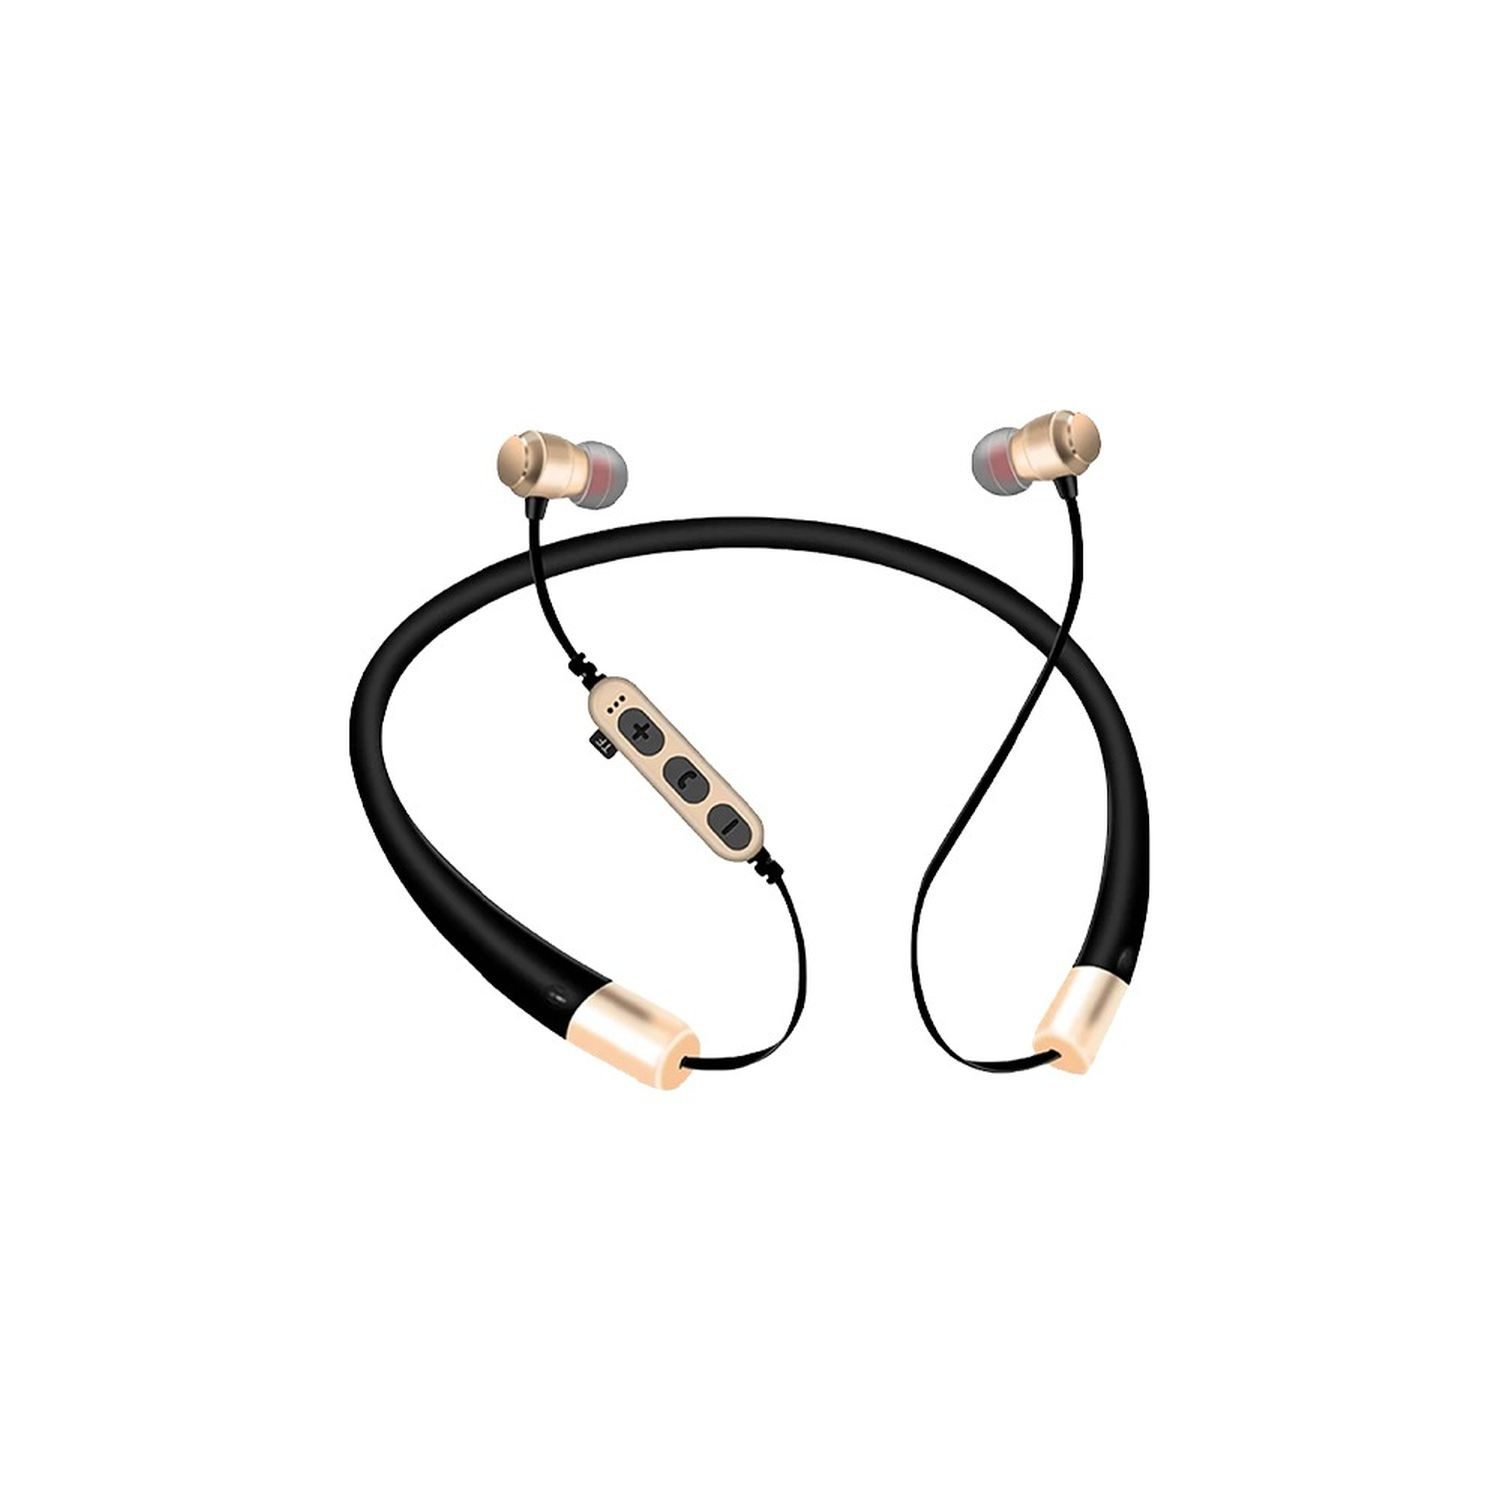 Schwarz-Grau Bluetooth In-ear Kopfhörer BLT-21, SUNIX